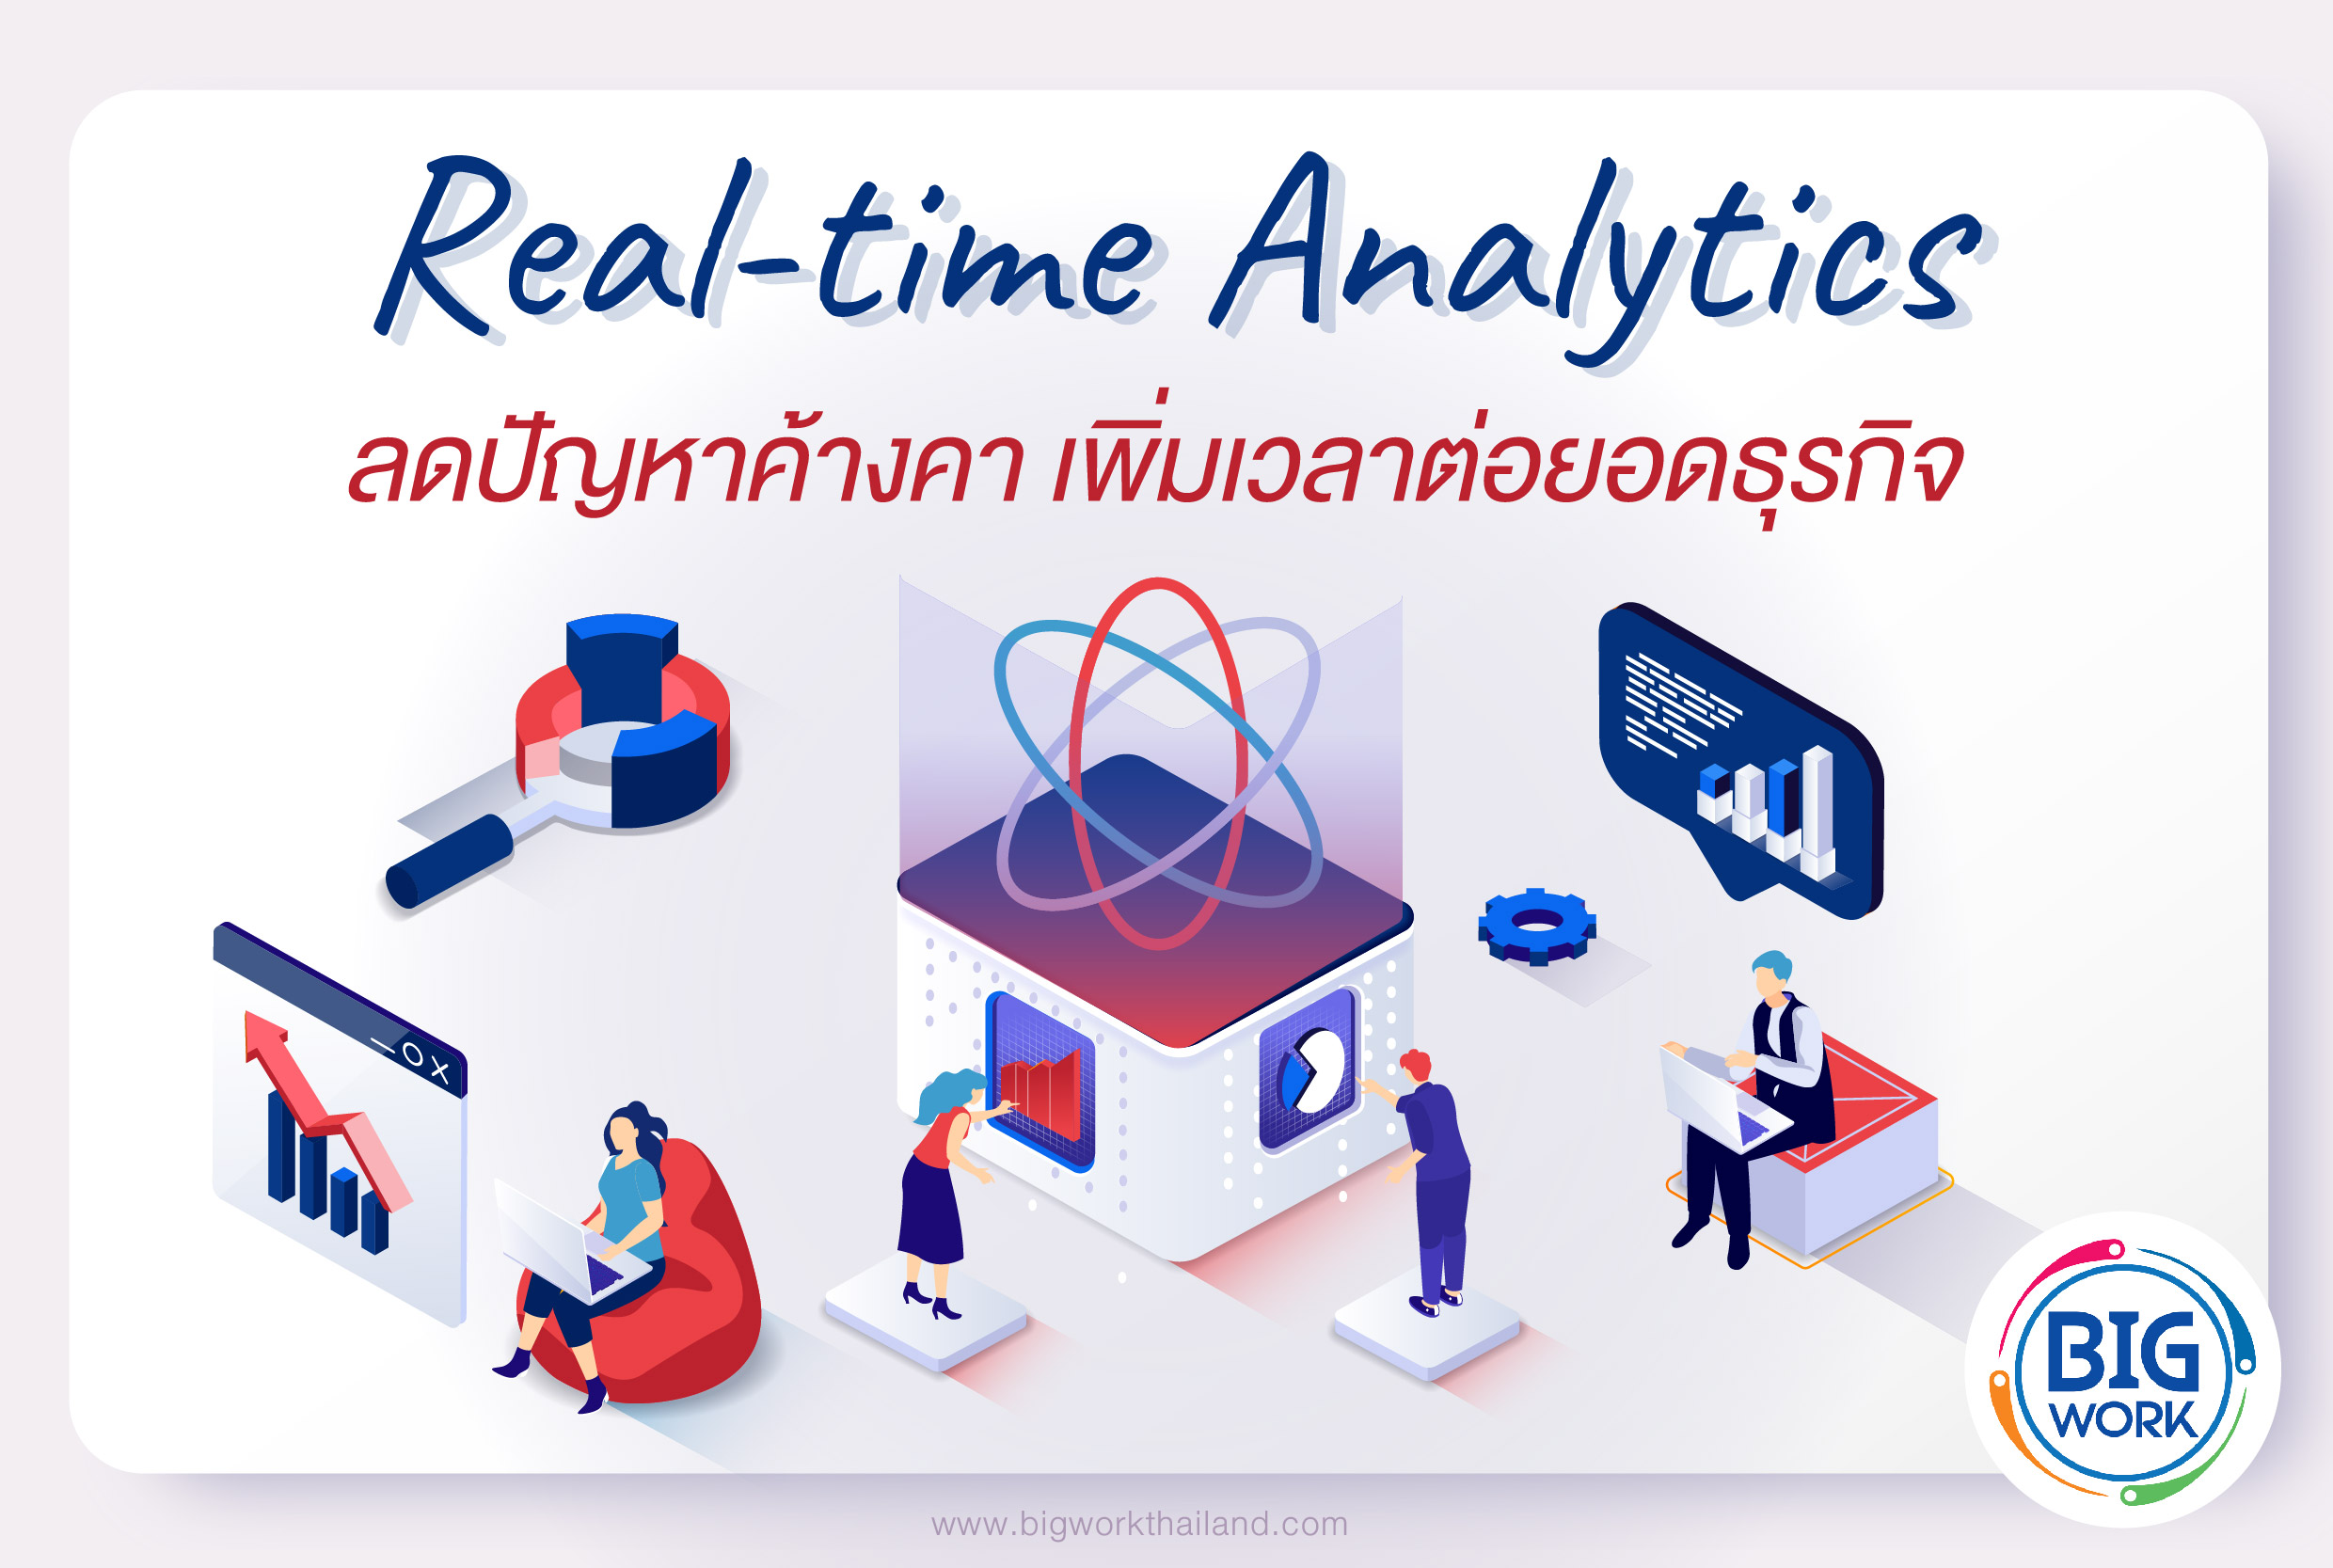 Real-time Analytics ลดปัญหาค้างคา เพิ่มเวลาต่อยอดธุรกิจ